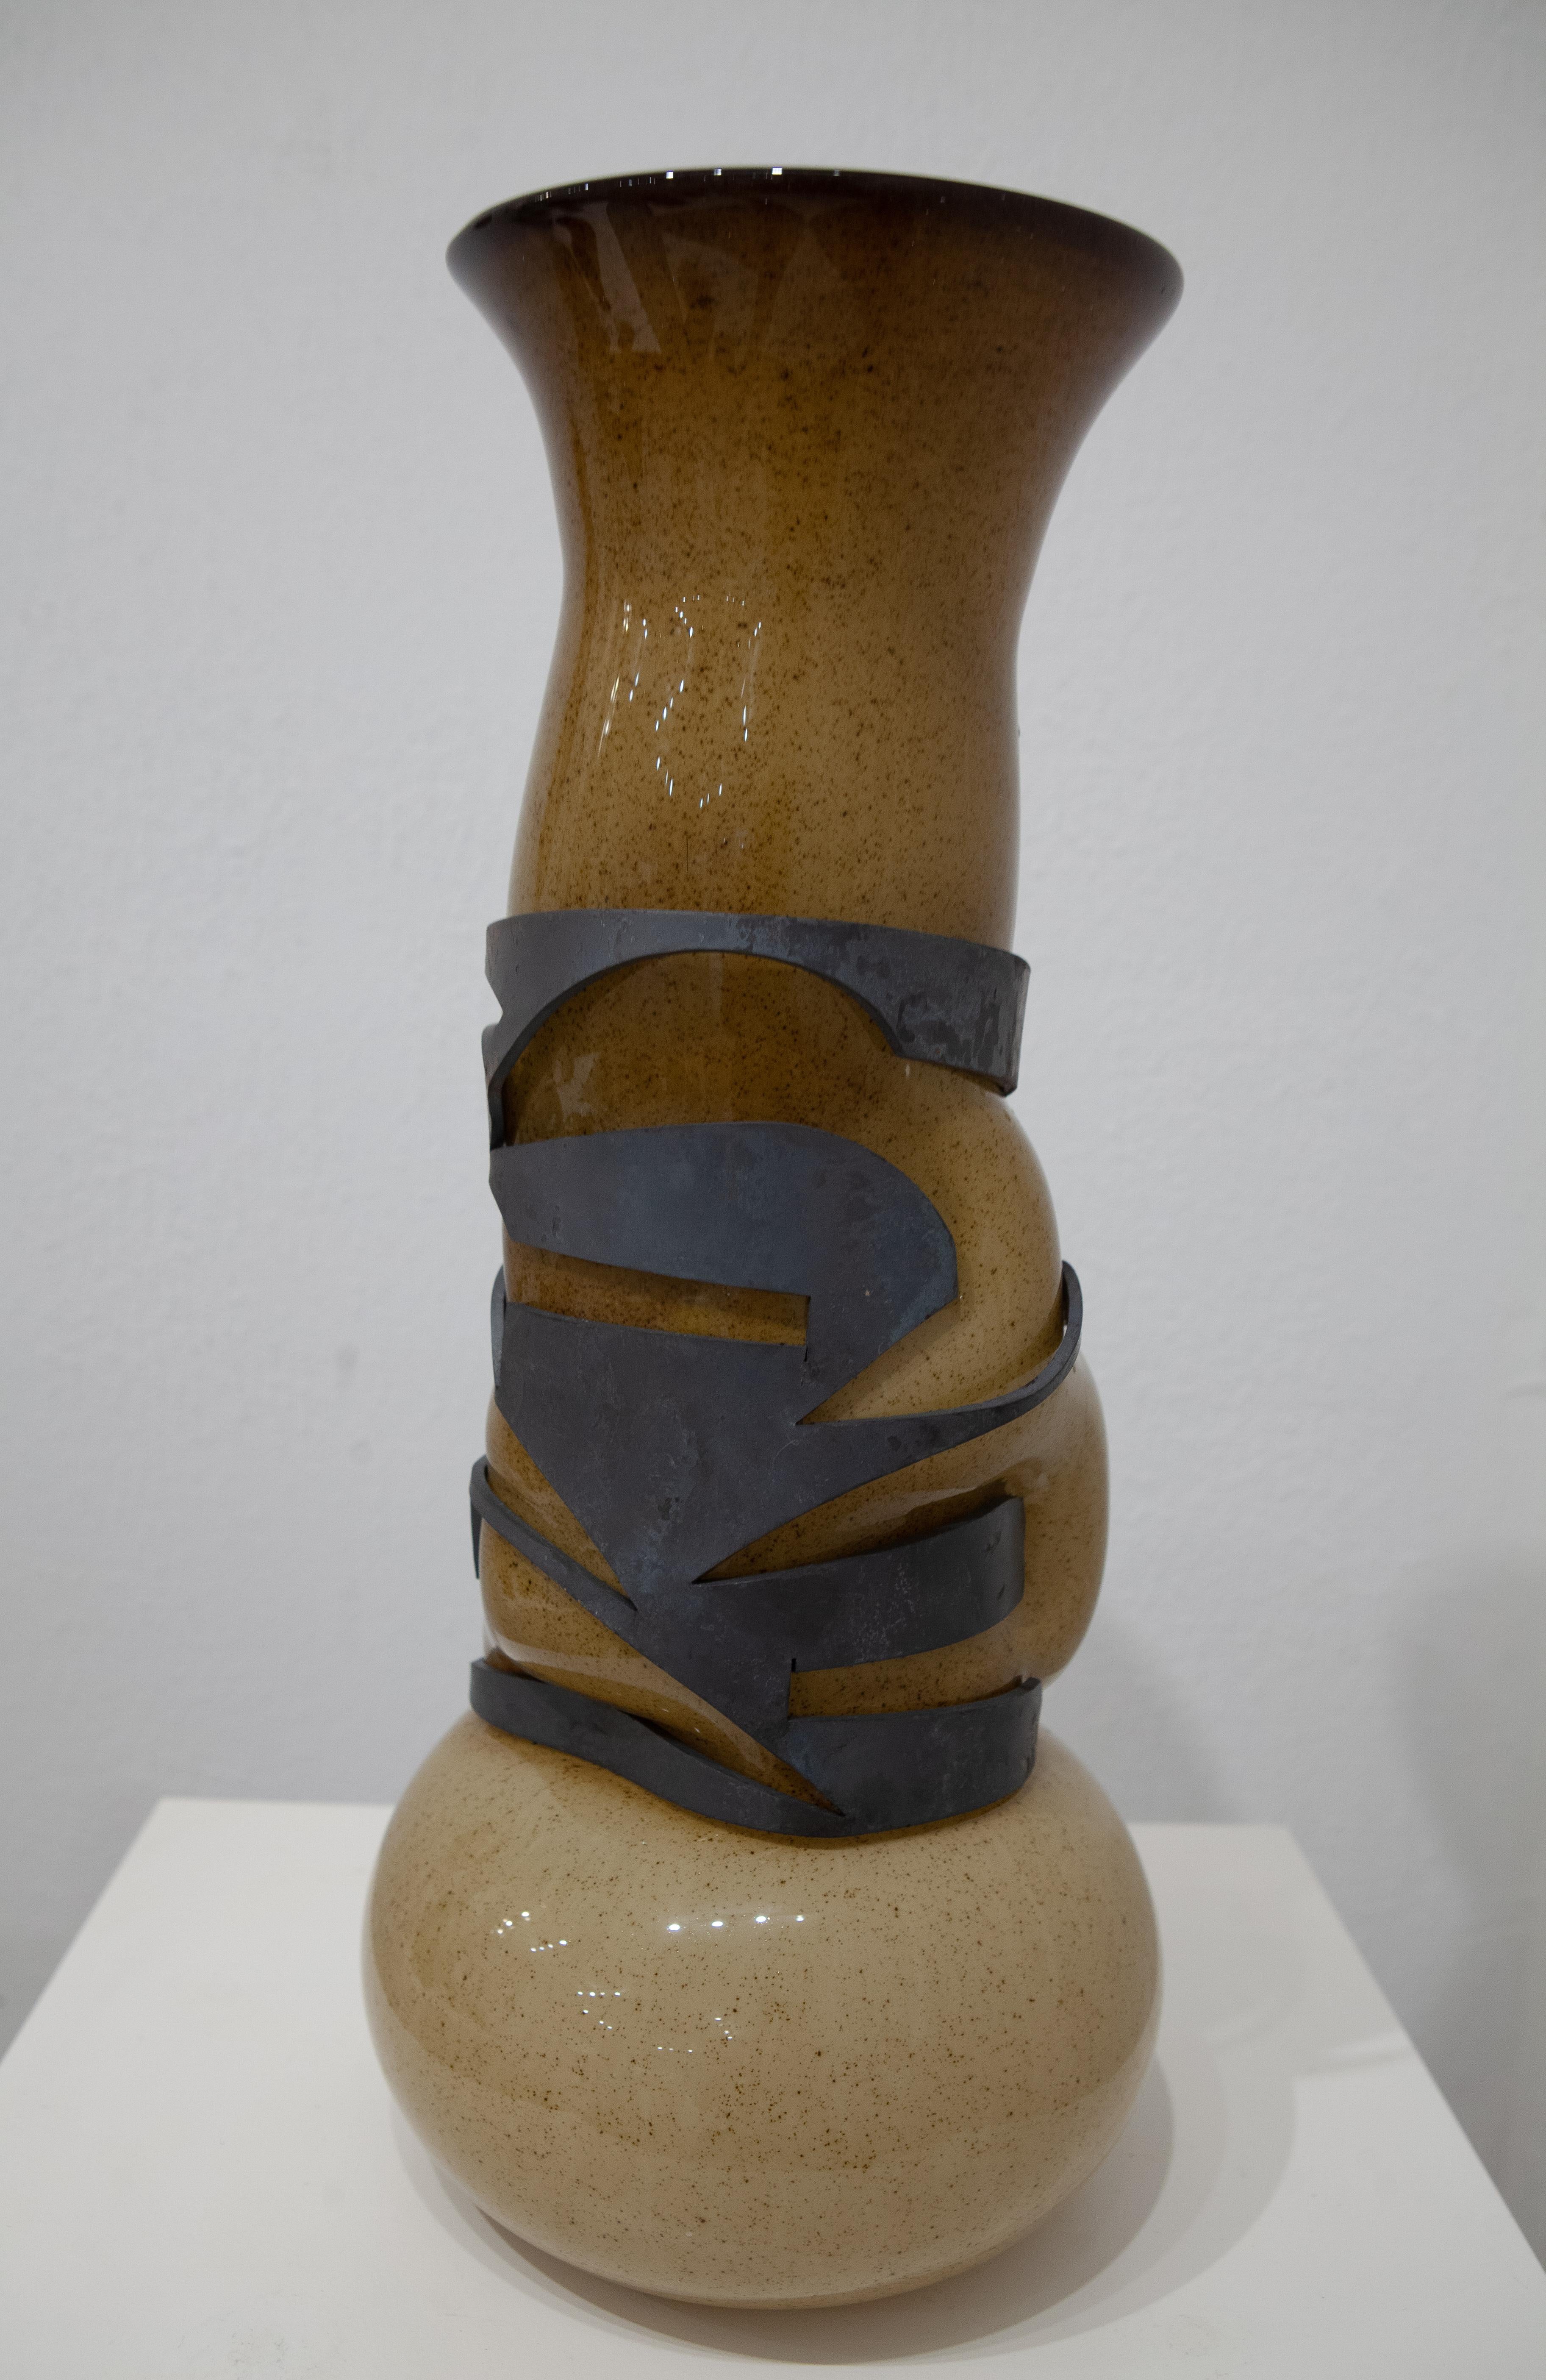 Contours (blown glass craft copper beige brown shape metal table top sculpture) - Mixed Media Art by Robert Burch